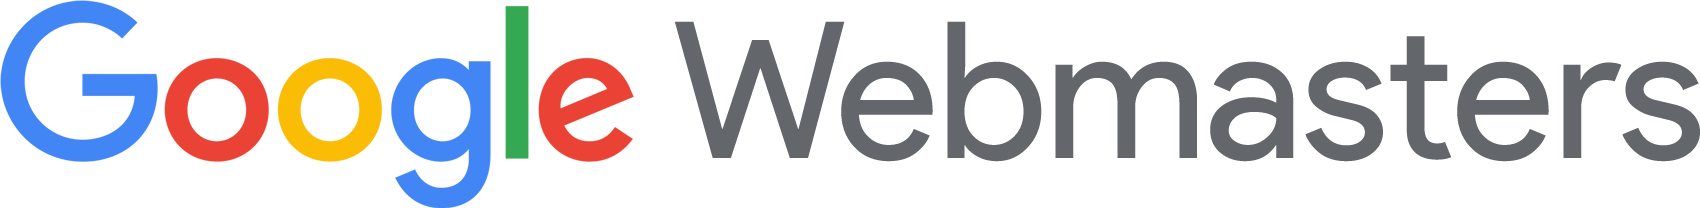 Webmaster Logo - Google Webmasters | Logopedia | FANDOM powered by Wikia